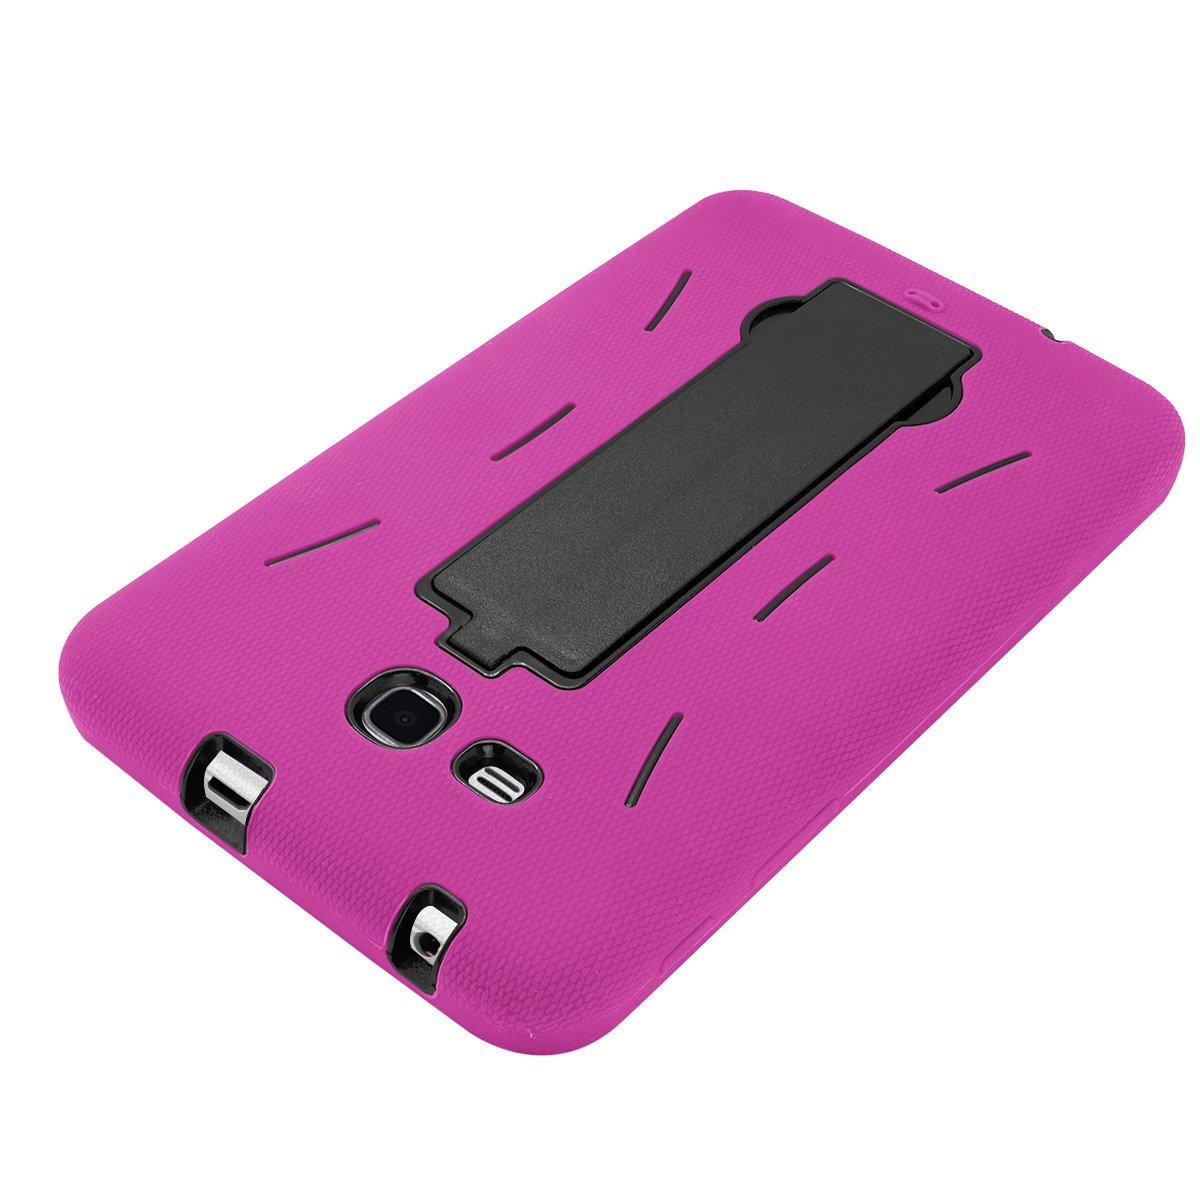 For Galaxy Tab E Lite 7.0 Case , Galaxy Tab 3 Lite 7.0 Case , Mignova Rugged Heavy Duty Kids Friendly Case For Samsung Galaxy E Lite 7.0 / Tab 3 Lite 7.0 SM-T110 / SM-T111 / SM-T113 / SM-T116(Pink) - image 5 of 6